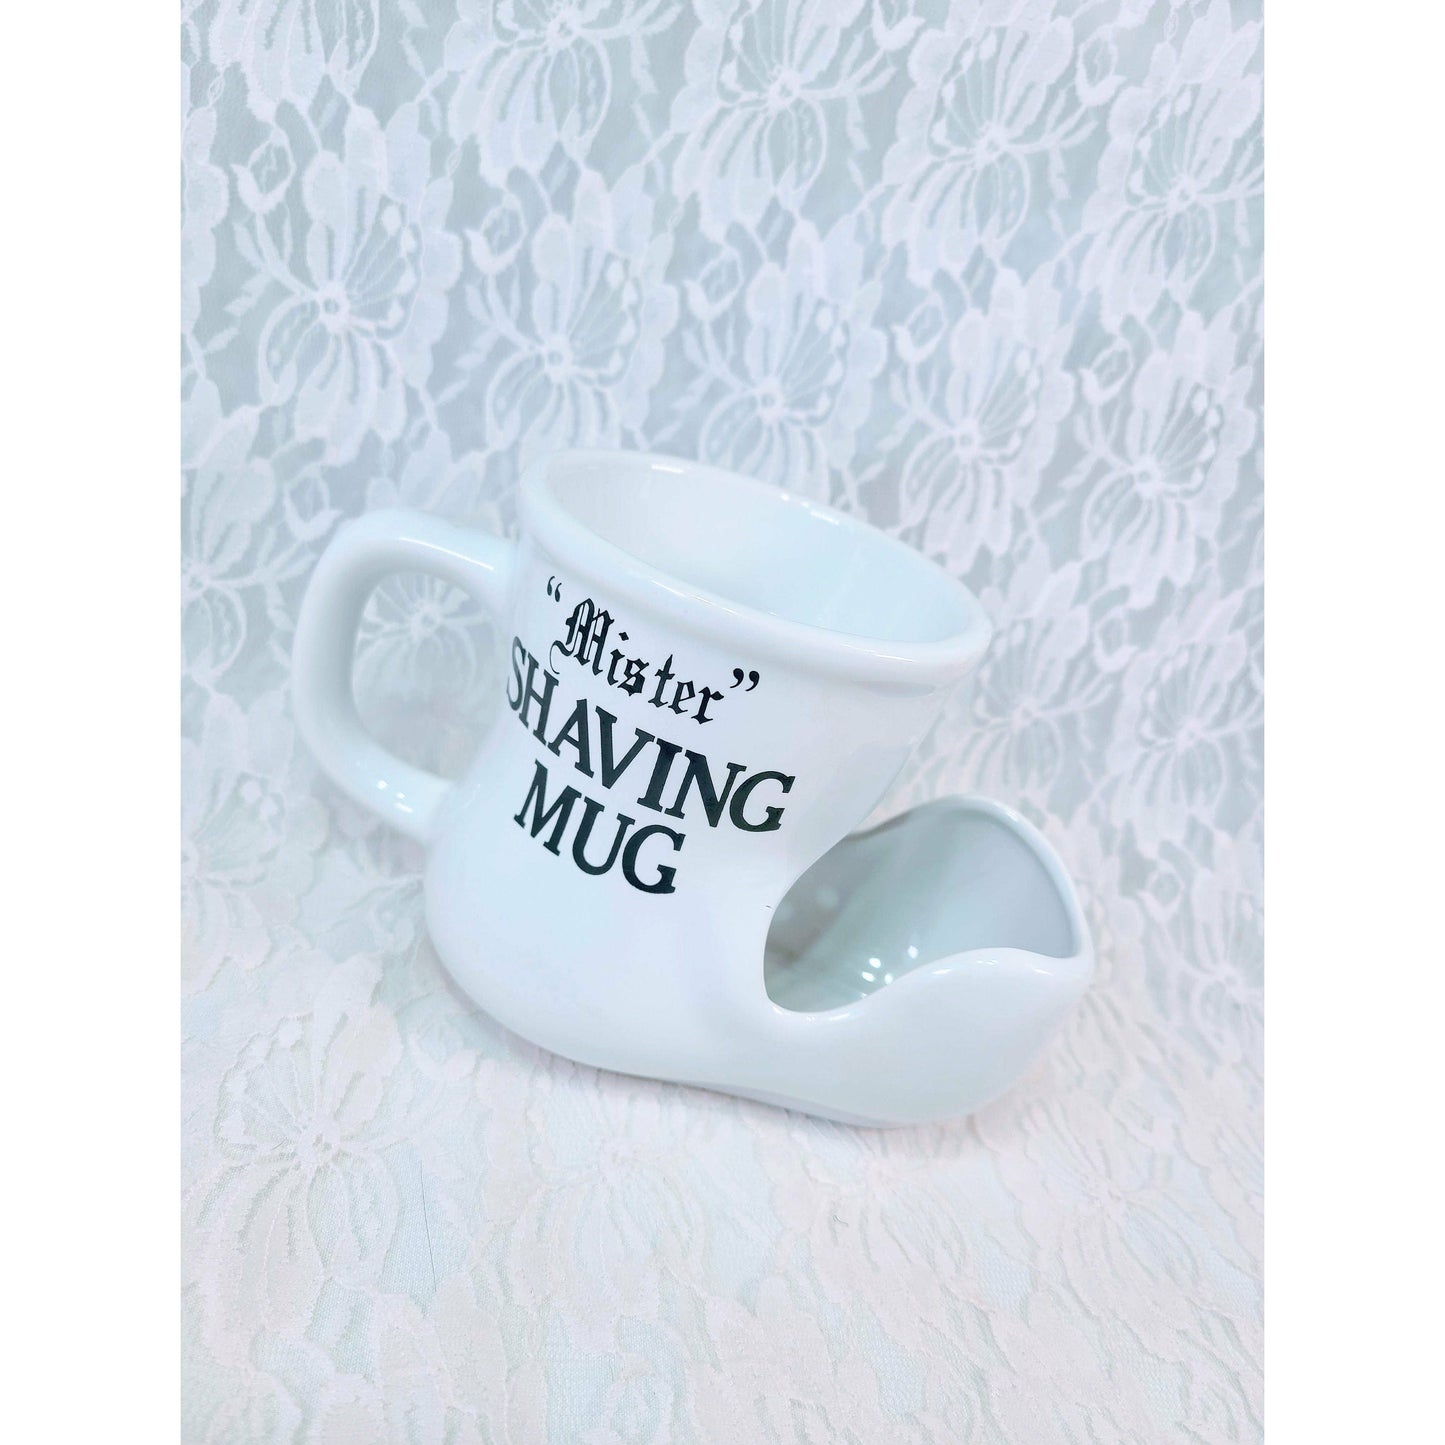 Shaving Mug "Mister" White Porcelain ~ Vintage 1983 ~ Old Fashioned Razor Brush Holder Mug ~ Shaving Scuttle ~ Antique Shaving Accessories